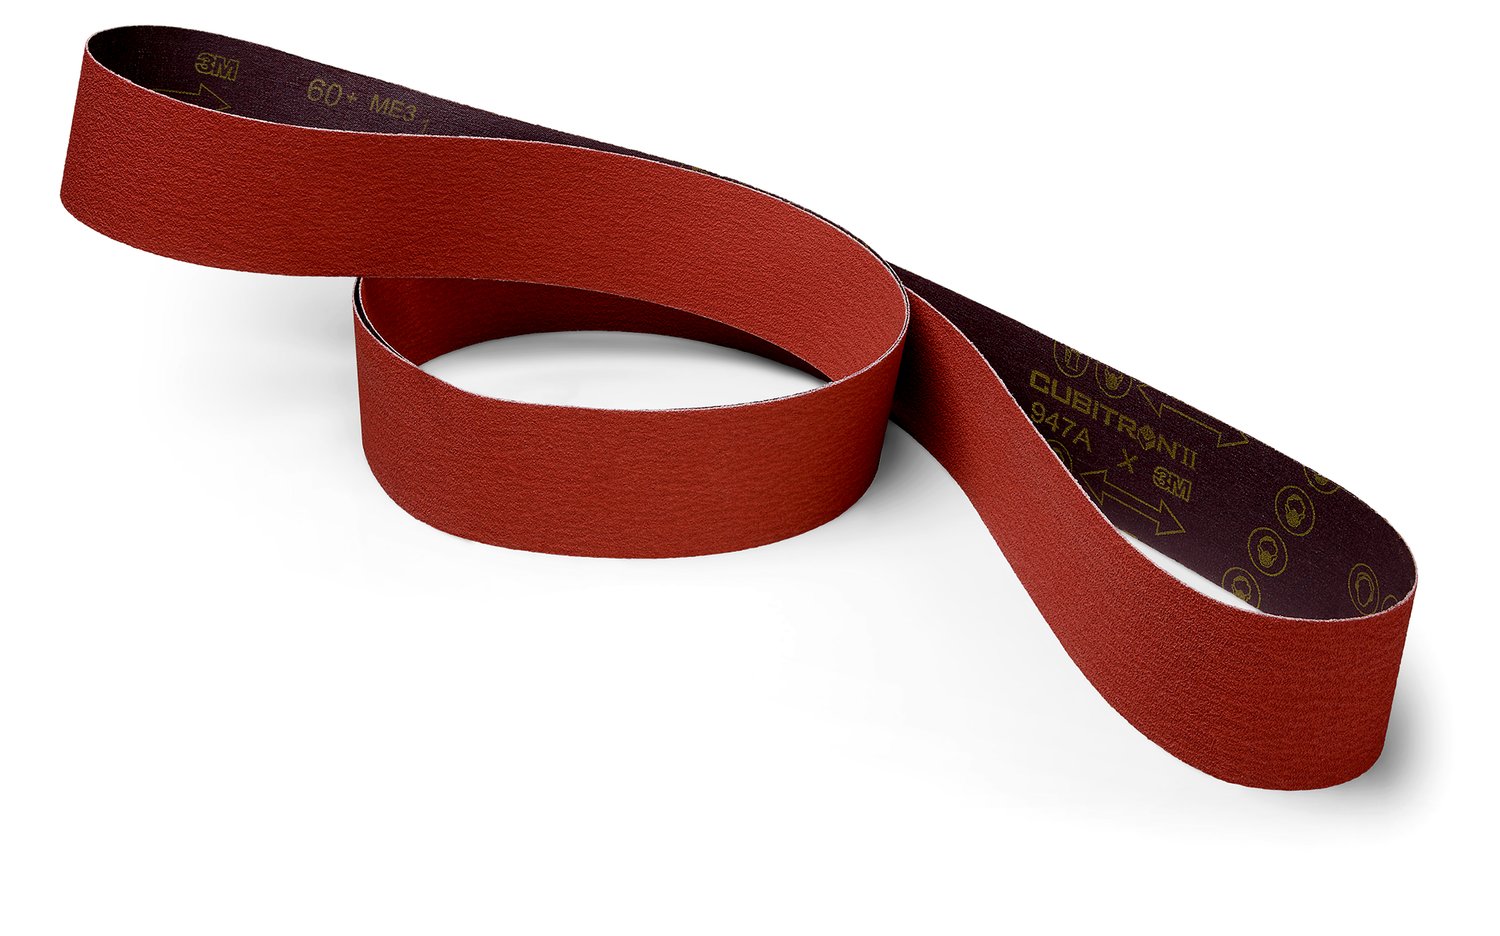 7010513530 - 3M Cubitron ll Cloth Belt 947A, 40+ X-weight, 1 in x 64 in, Film-lok,
Single-flex